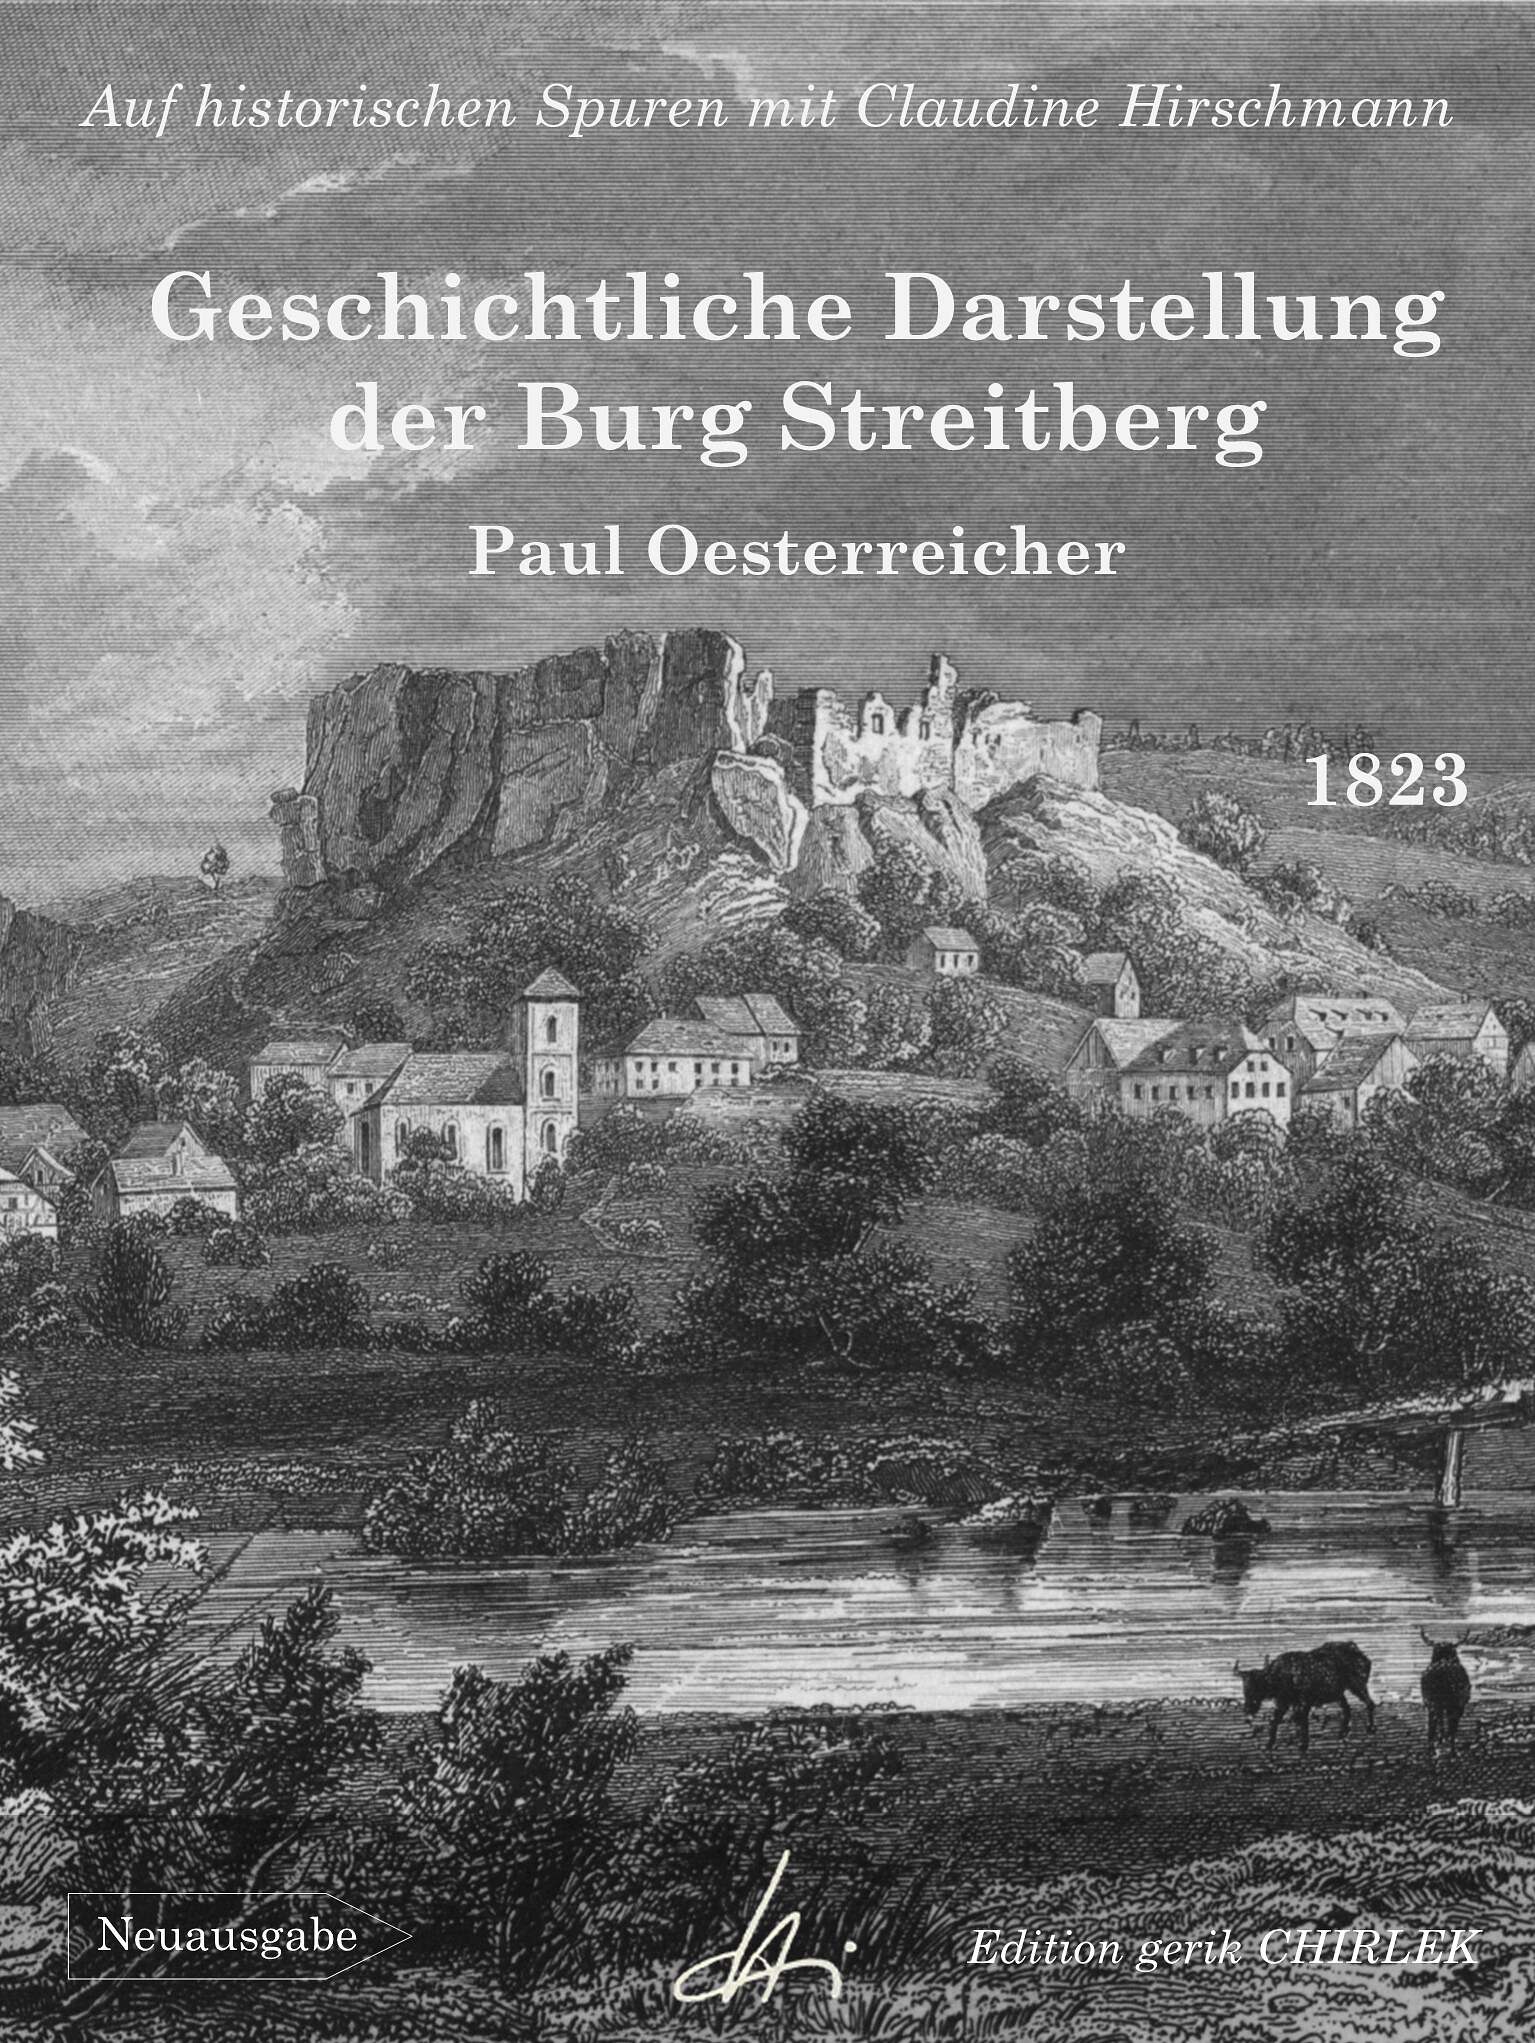 Buch Cover: Burg Streitberg